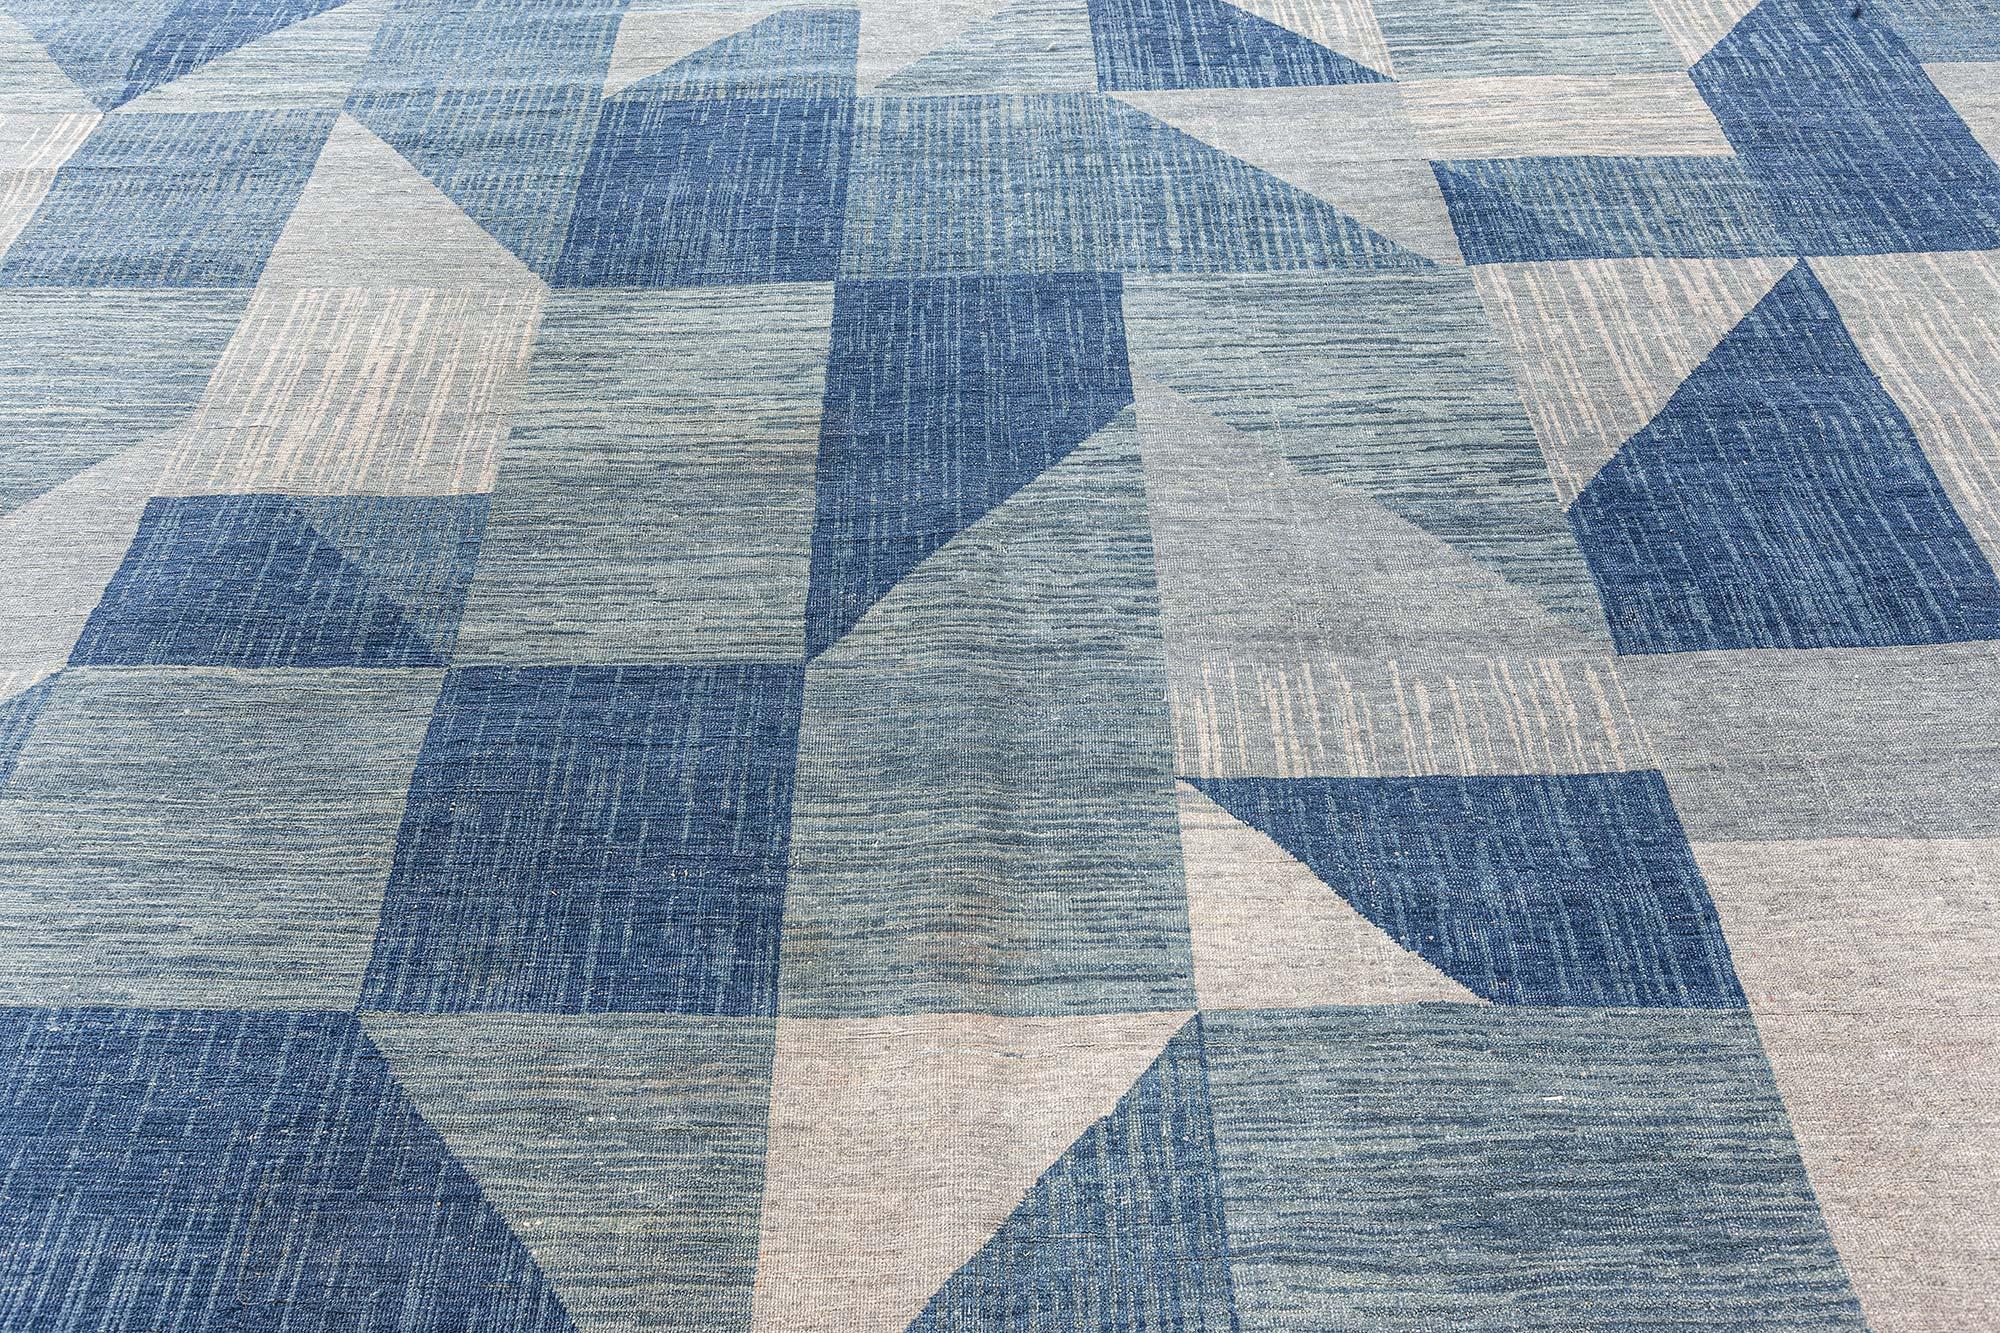 Contemporary geometric rug by Doris Leslie Blau.
Size: 11'10